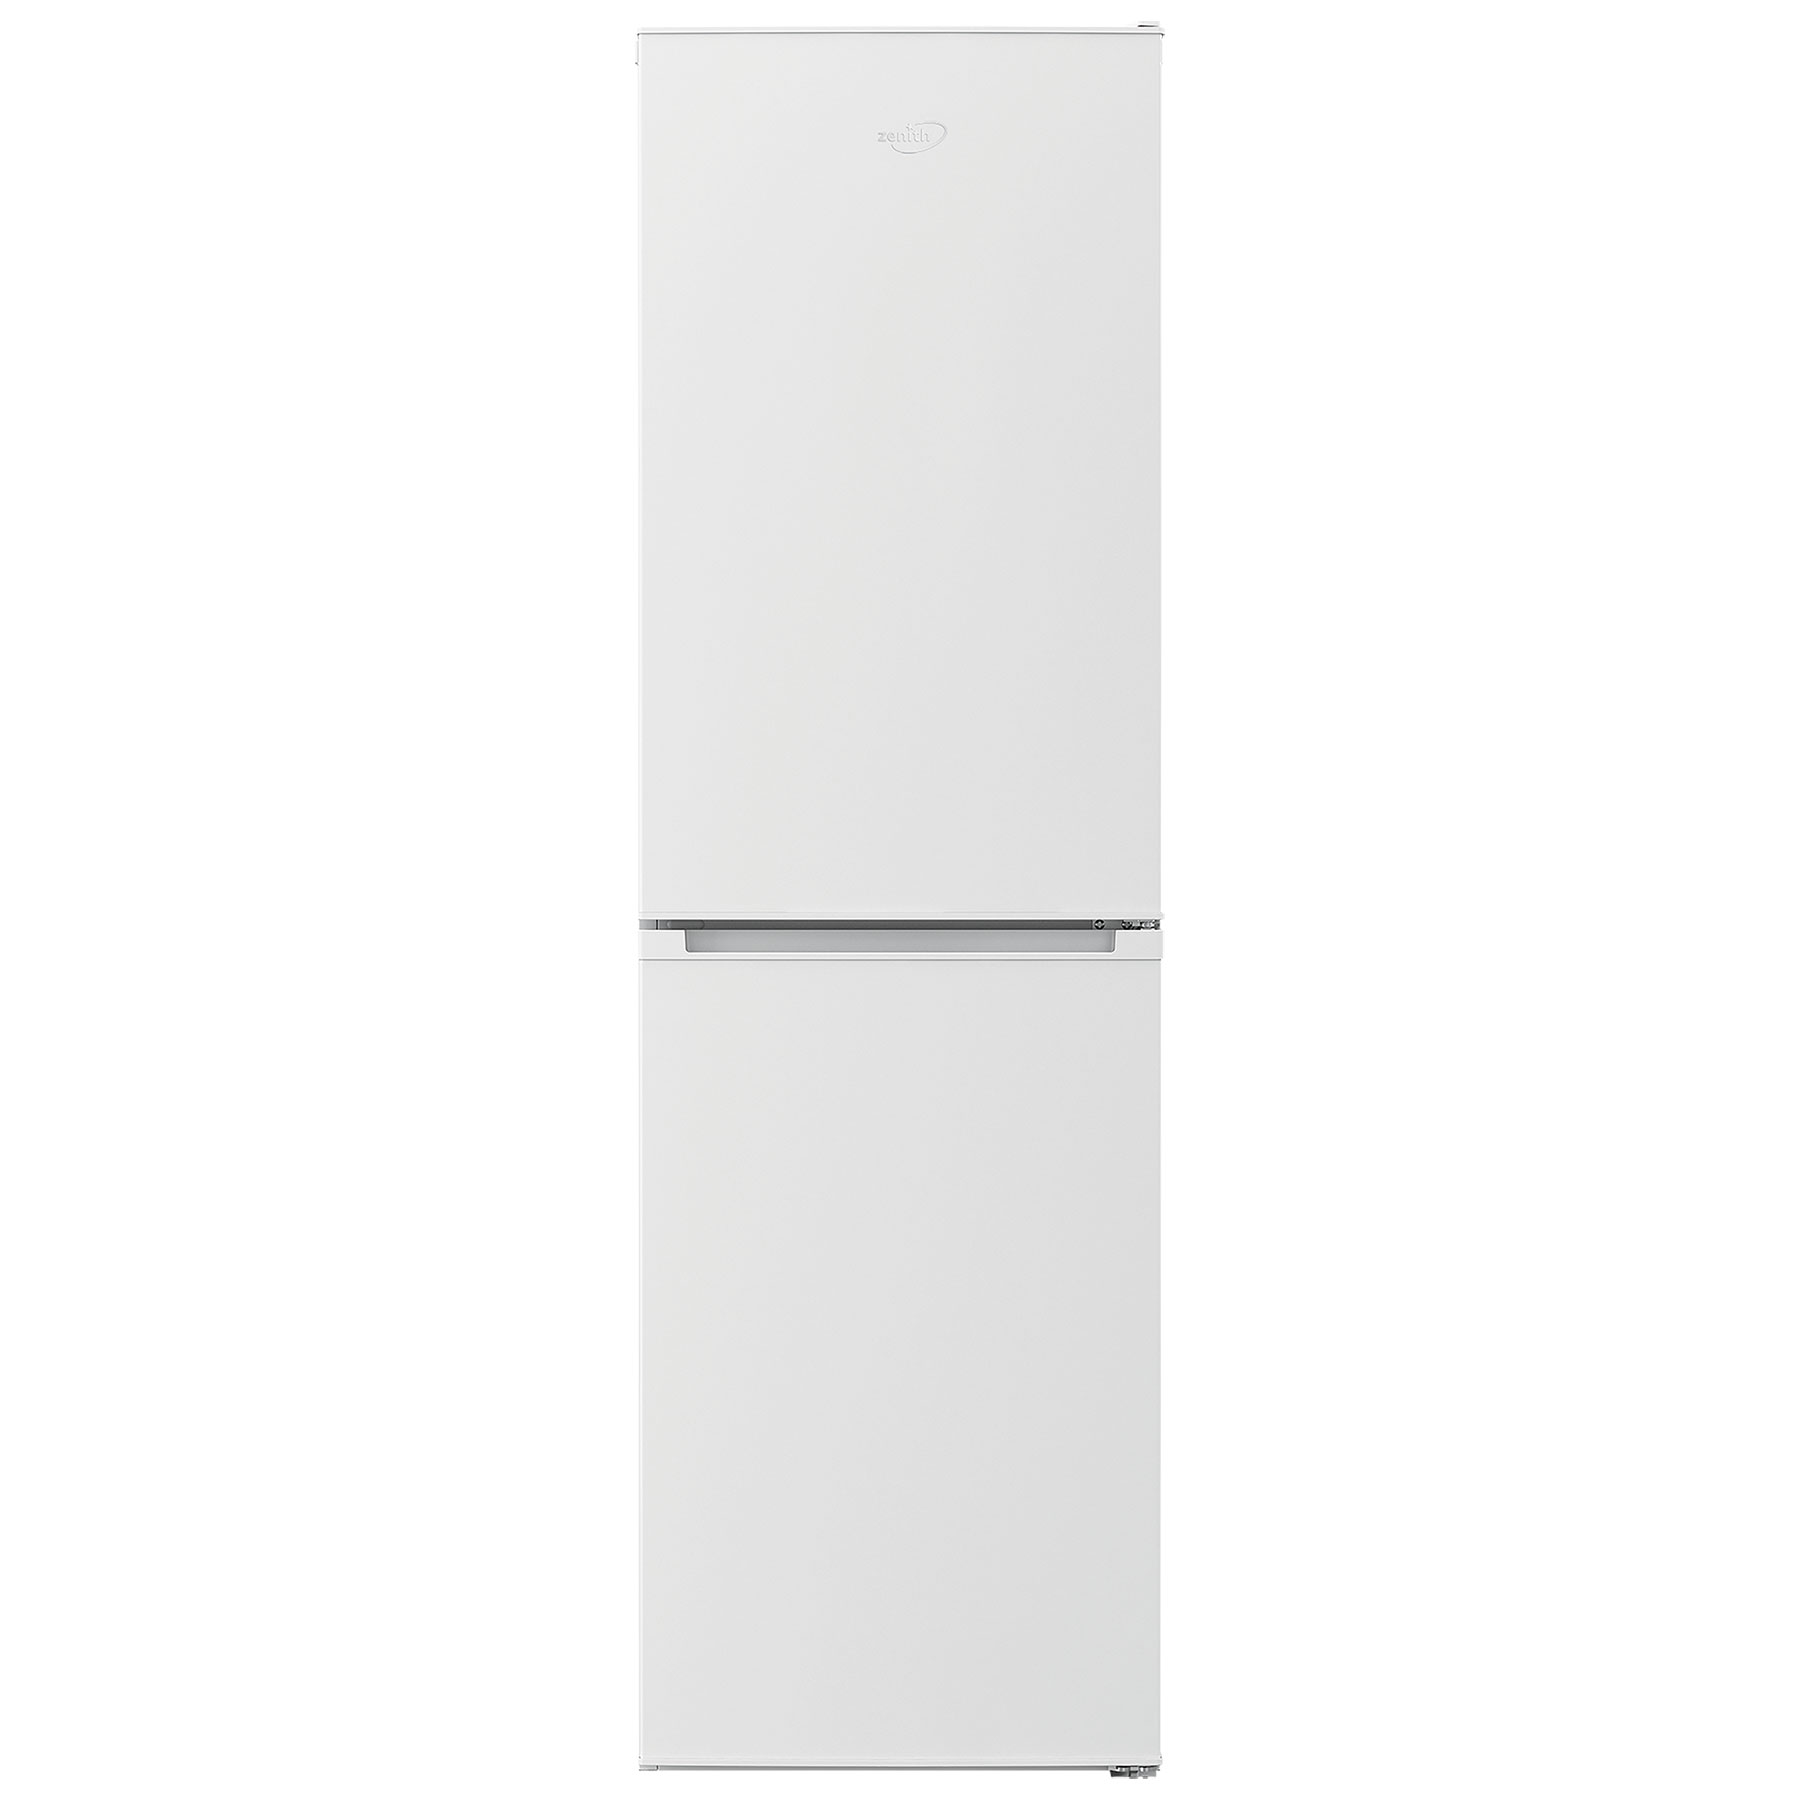 Zenith ZCS4582W 54cm Fridge Freezer in White 1 82m E Rated 168 119L